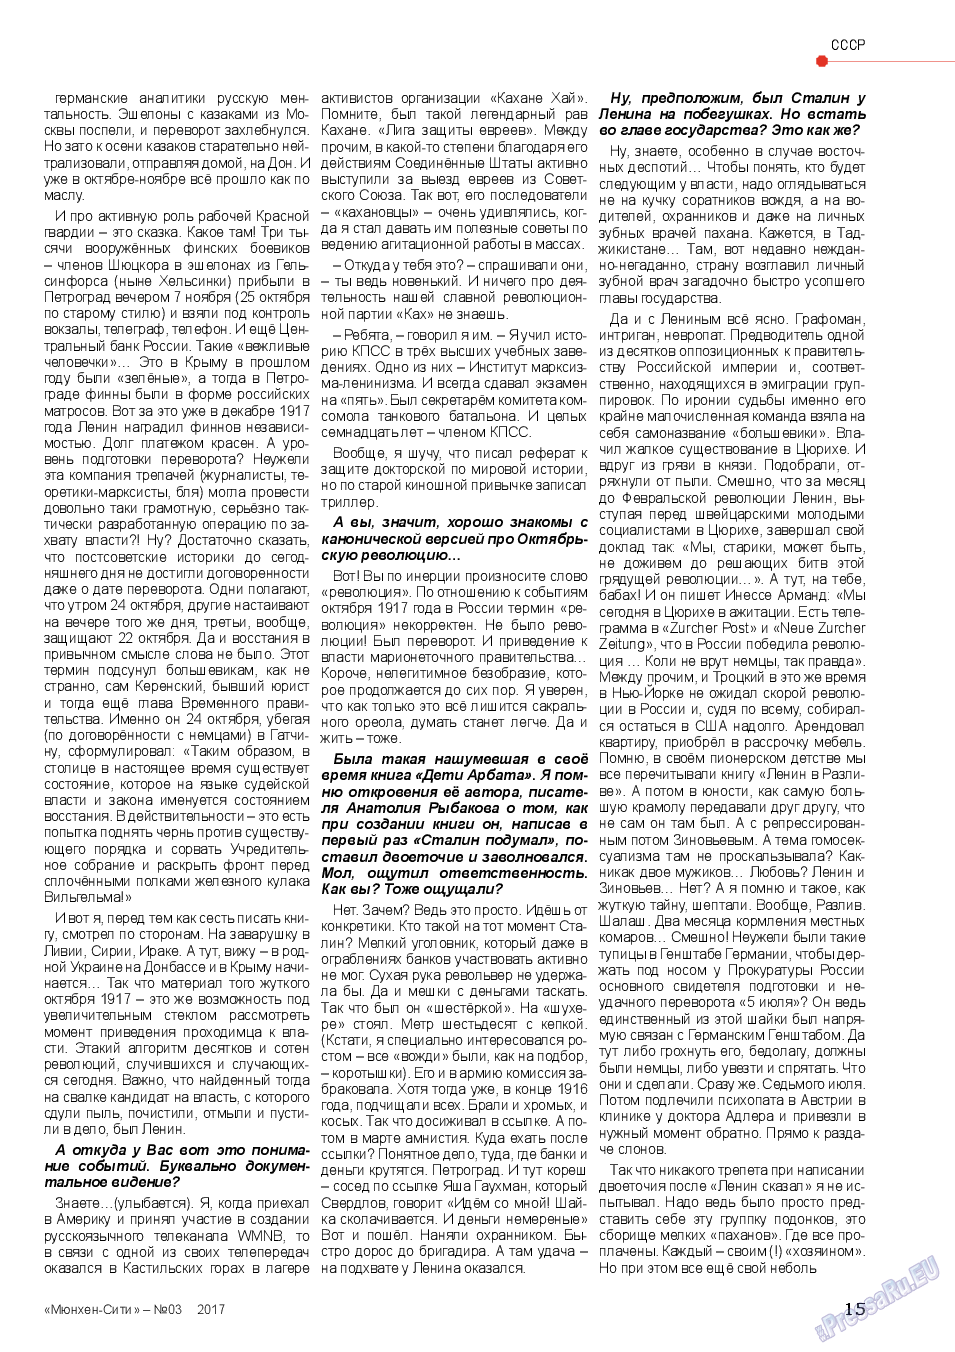 Мюнхен-сити, журнал. 2017 №3 стр.15